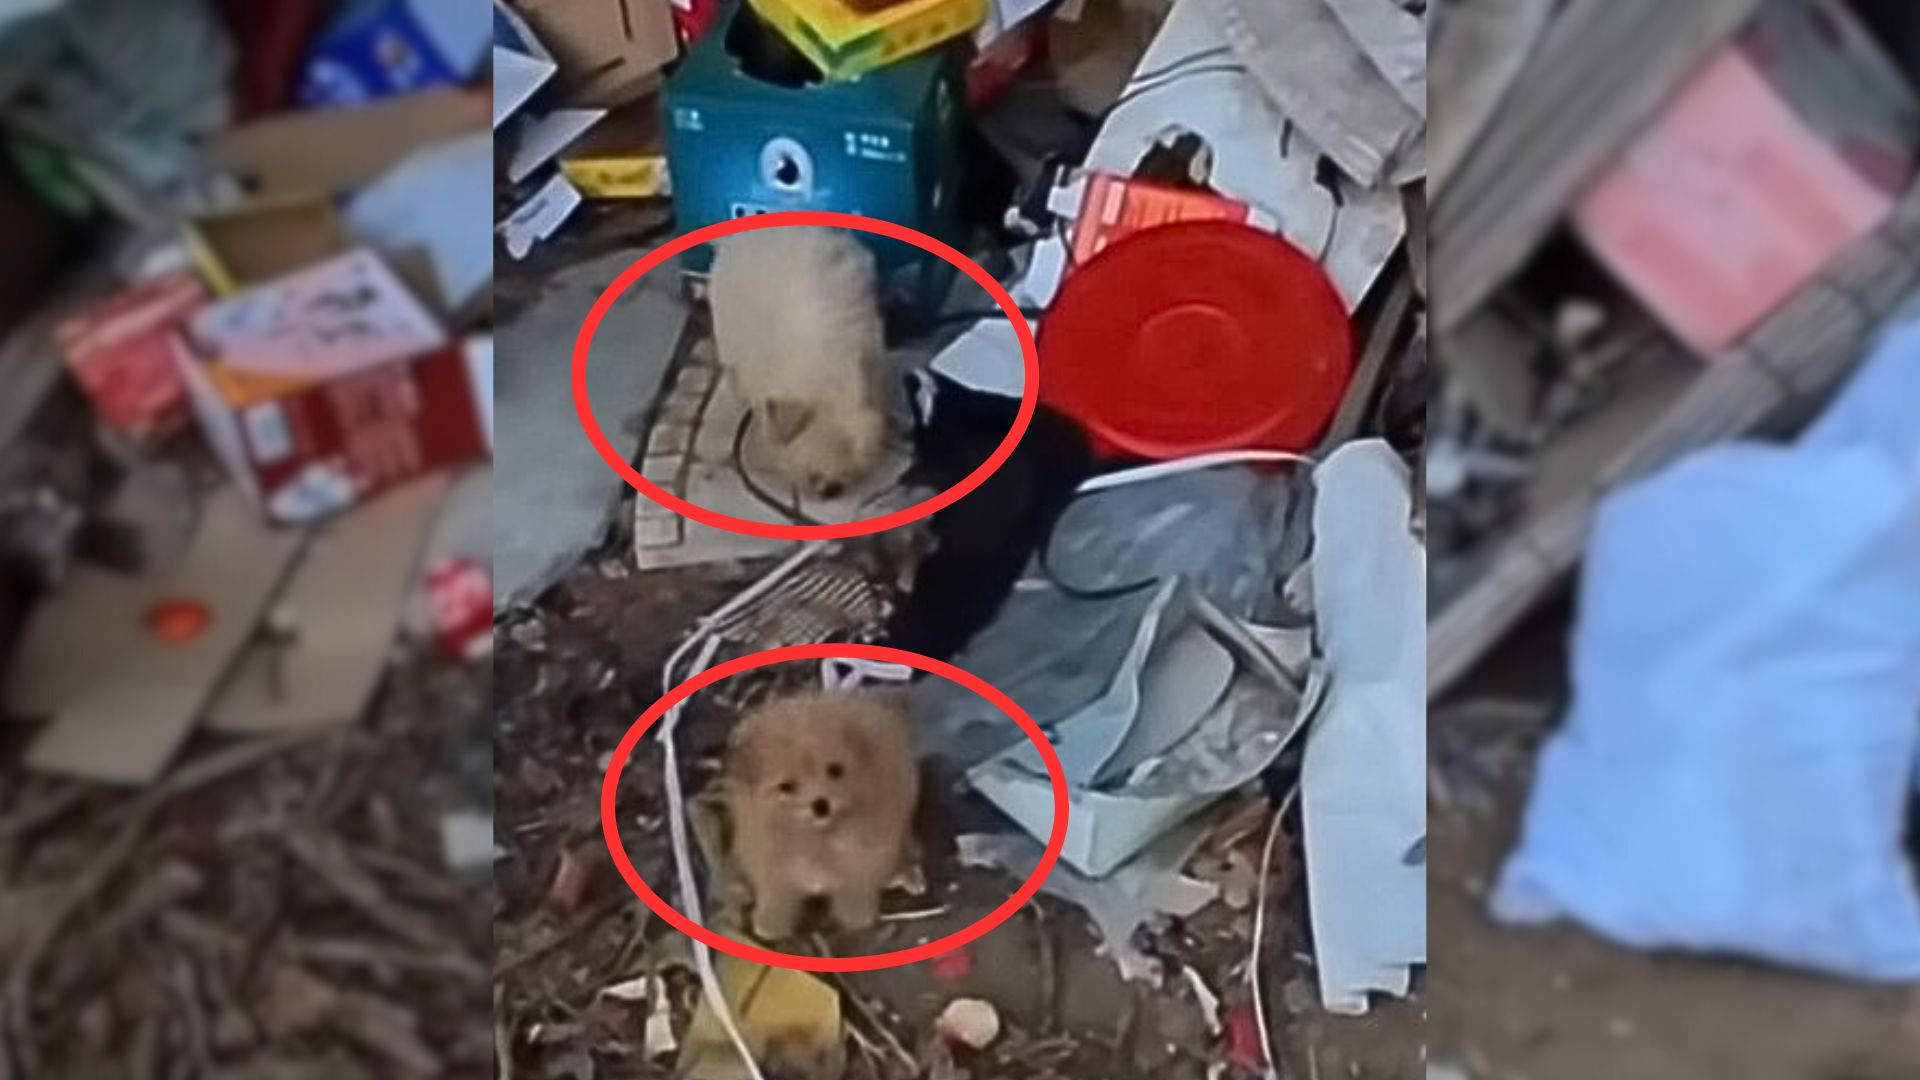 Adorable puppies in trash